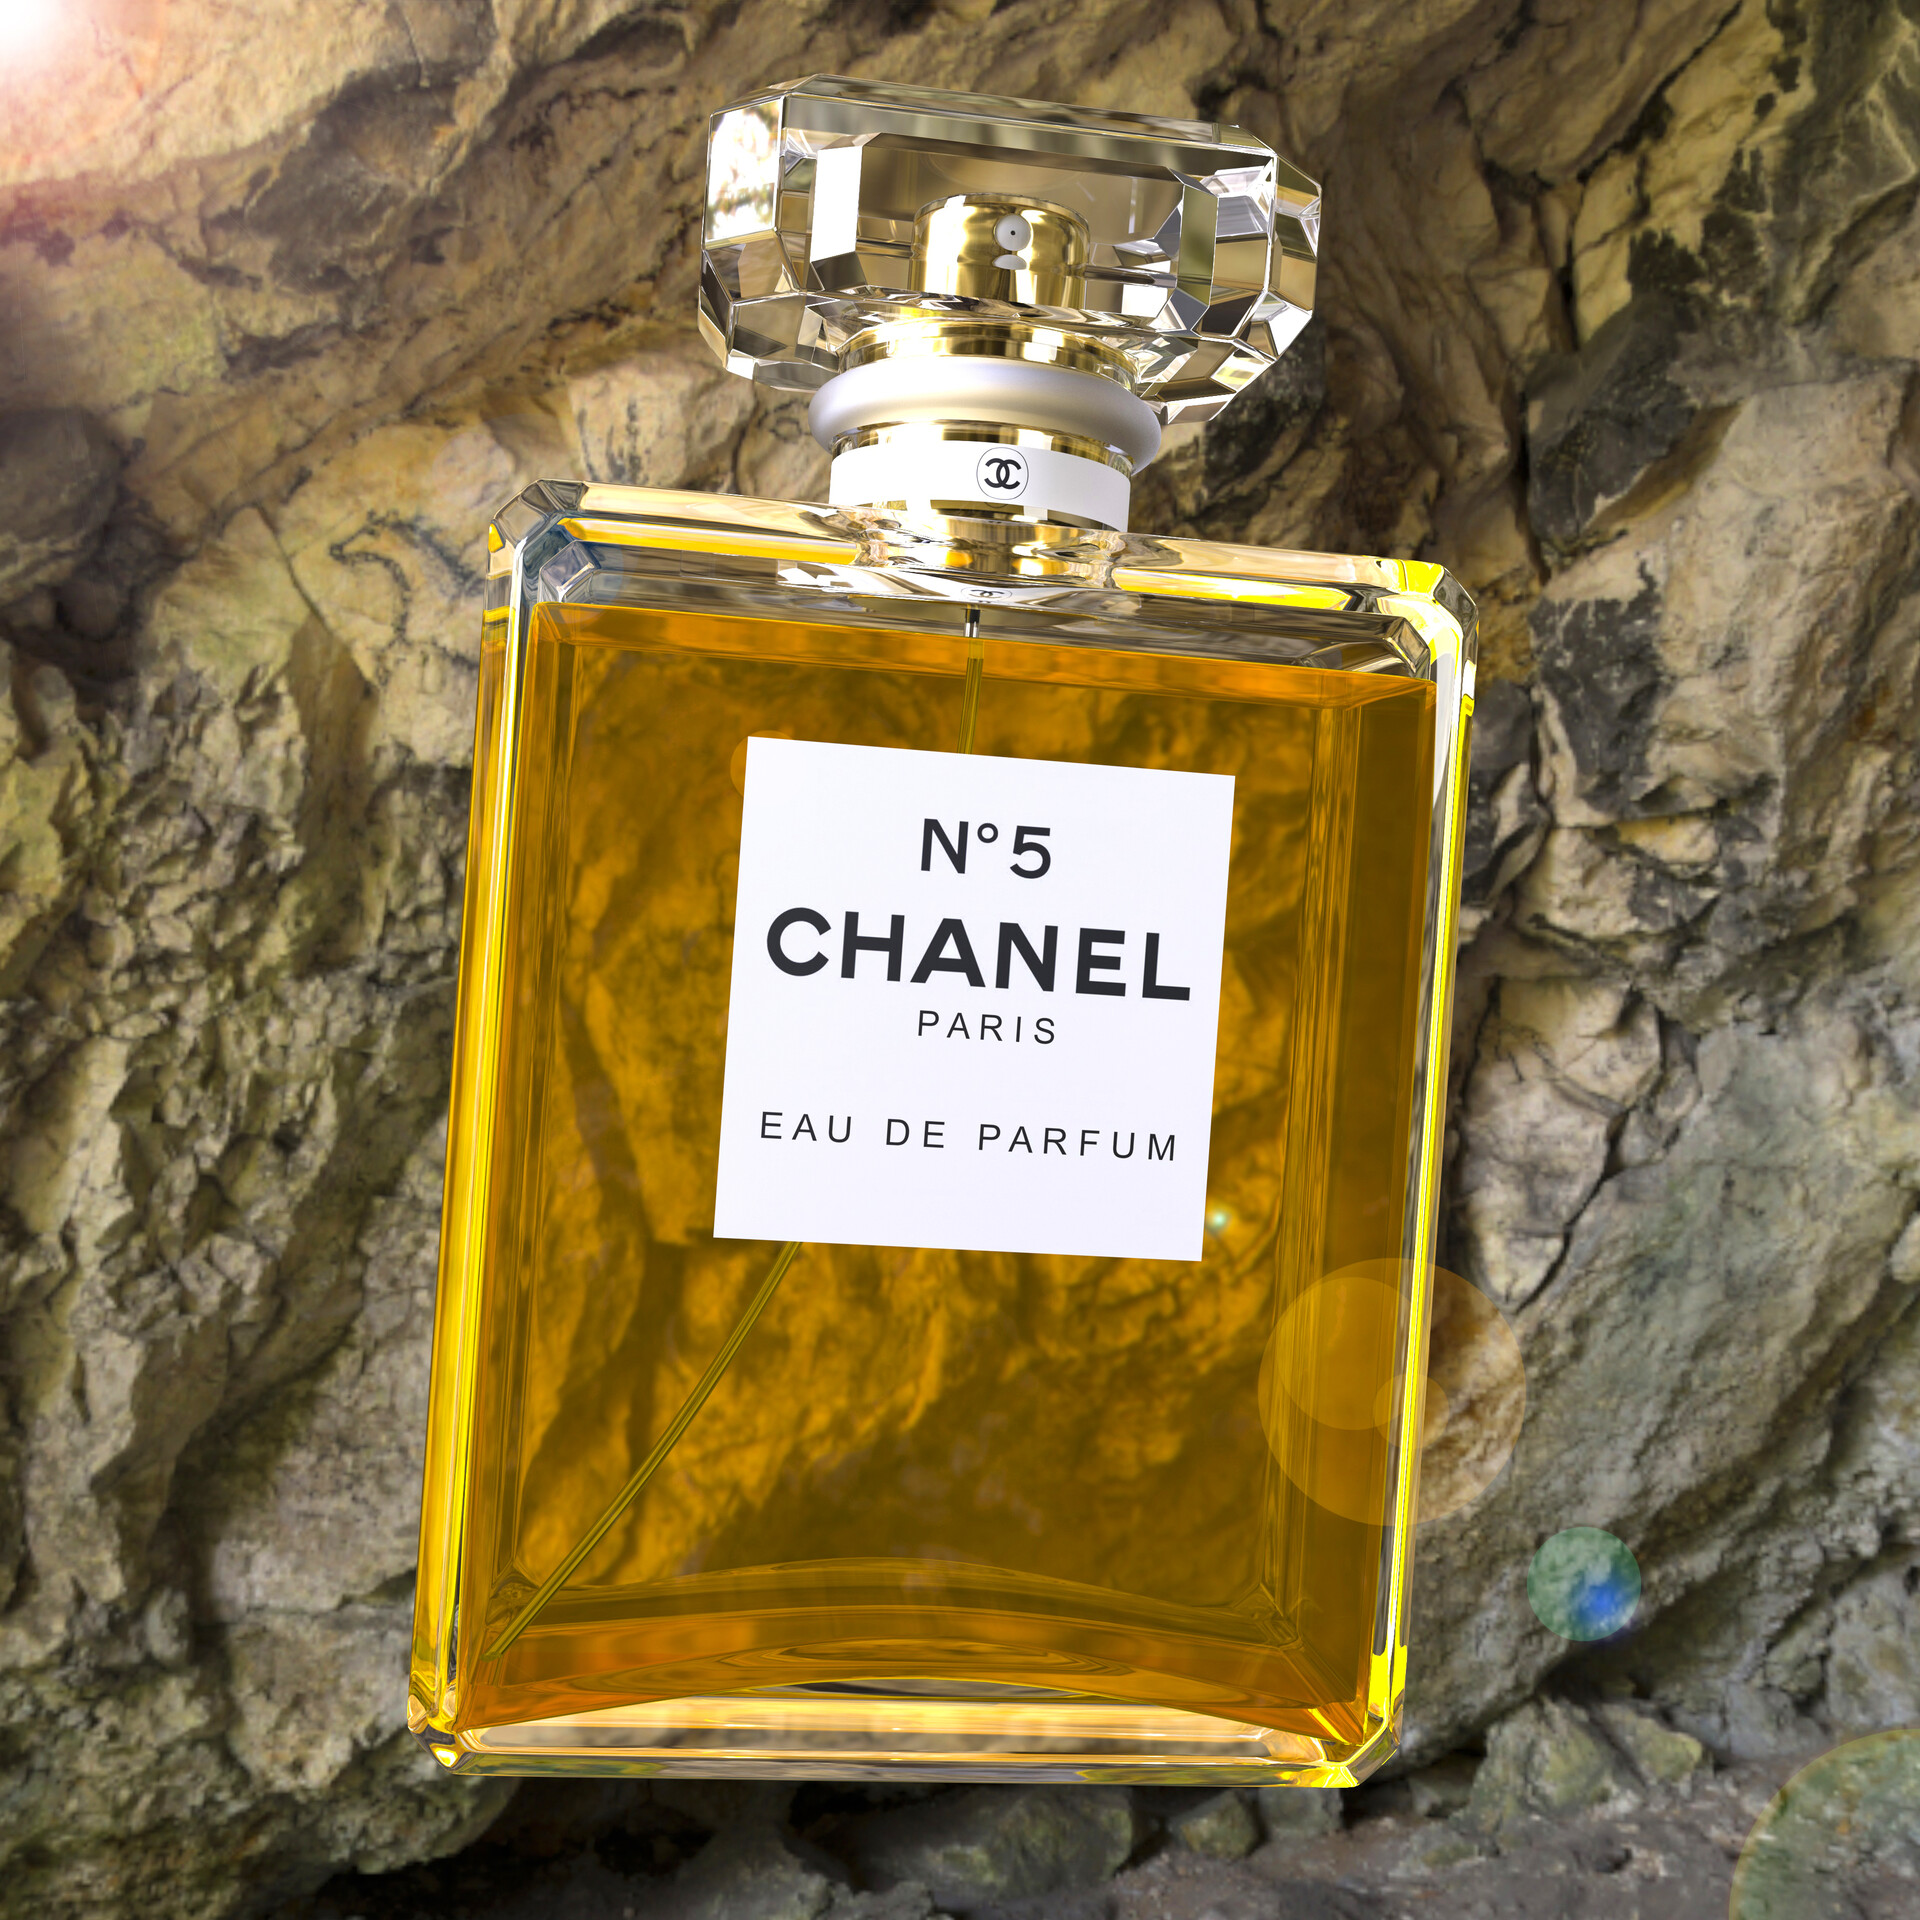 ArtStation - Chanel No.5 Perfume Bottle